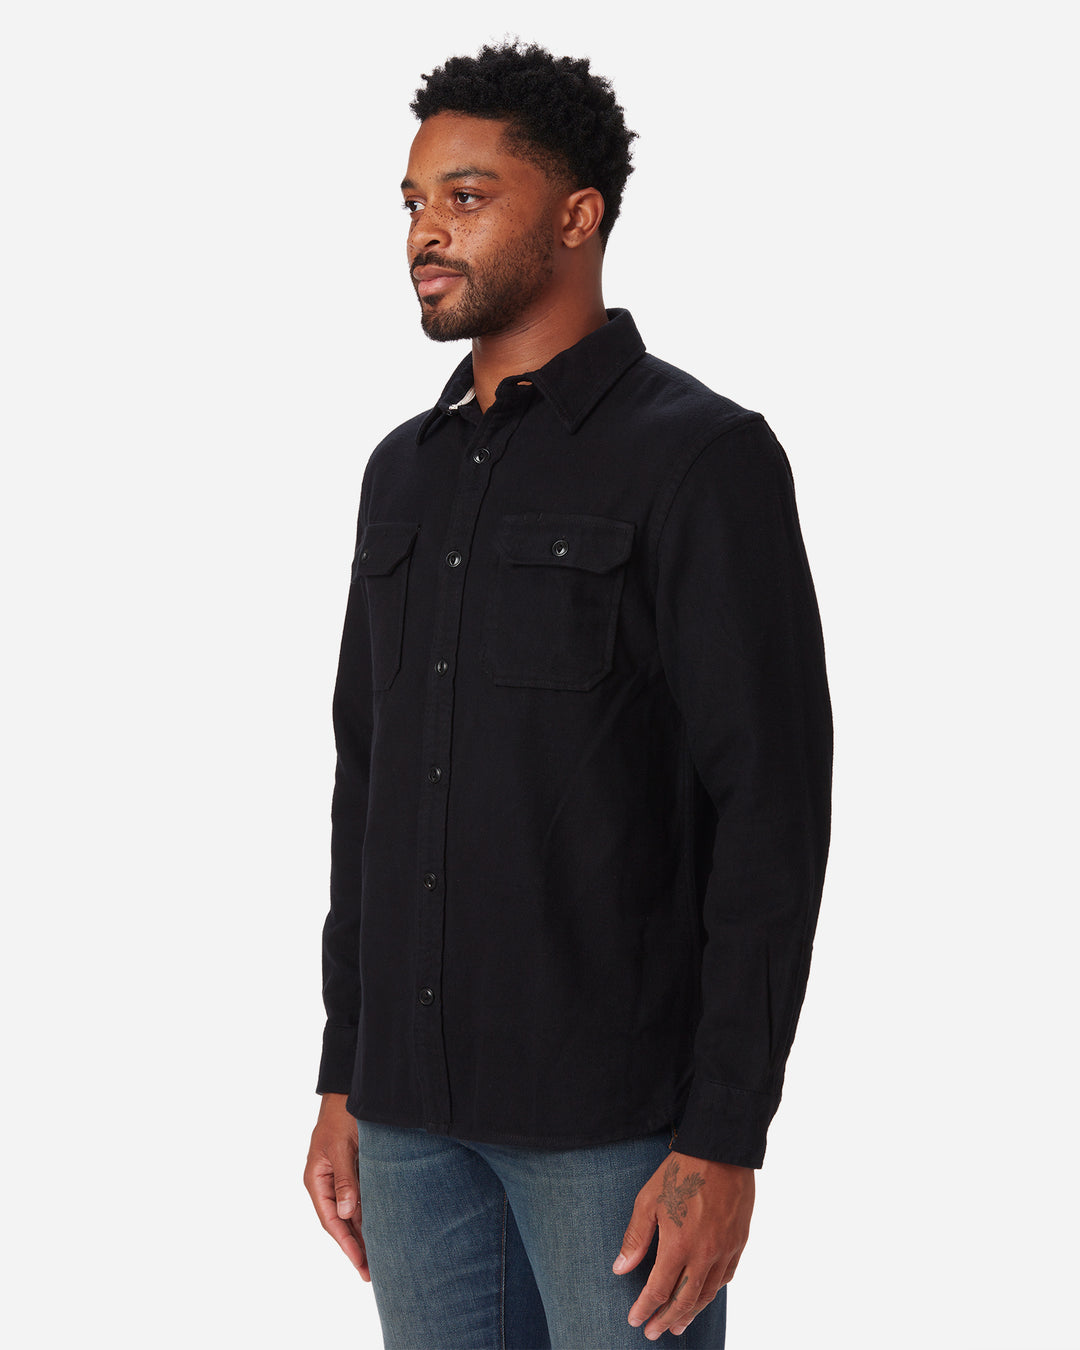 Flannel - Utility Shirt - Black Black